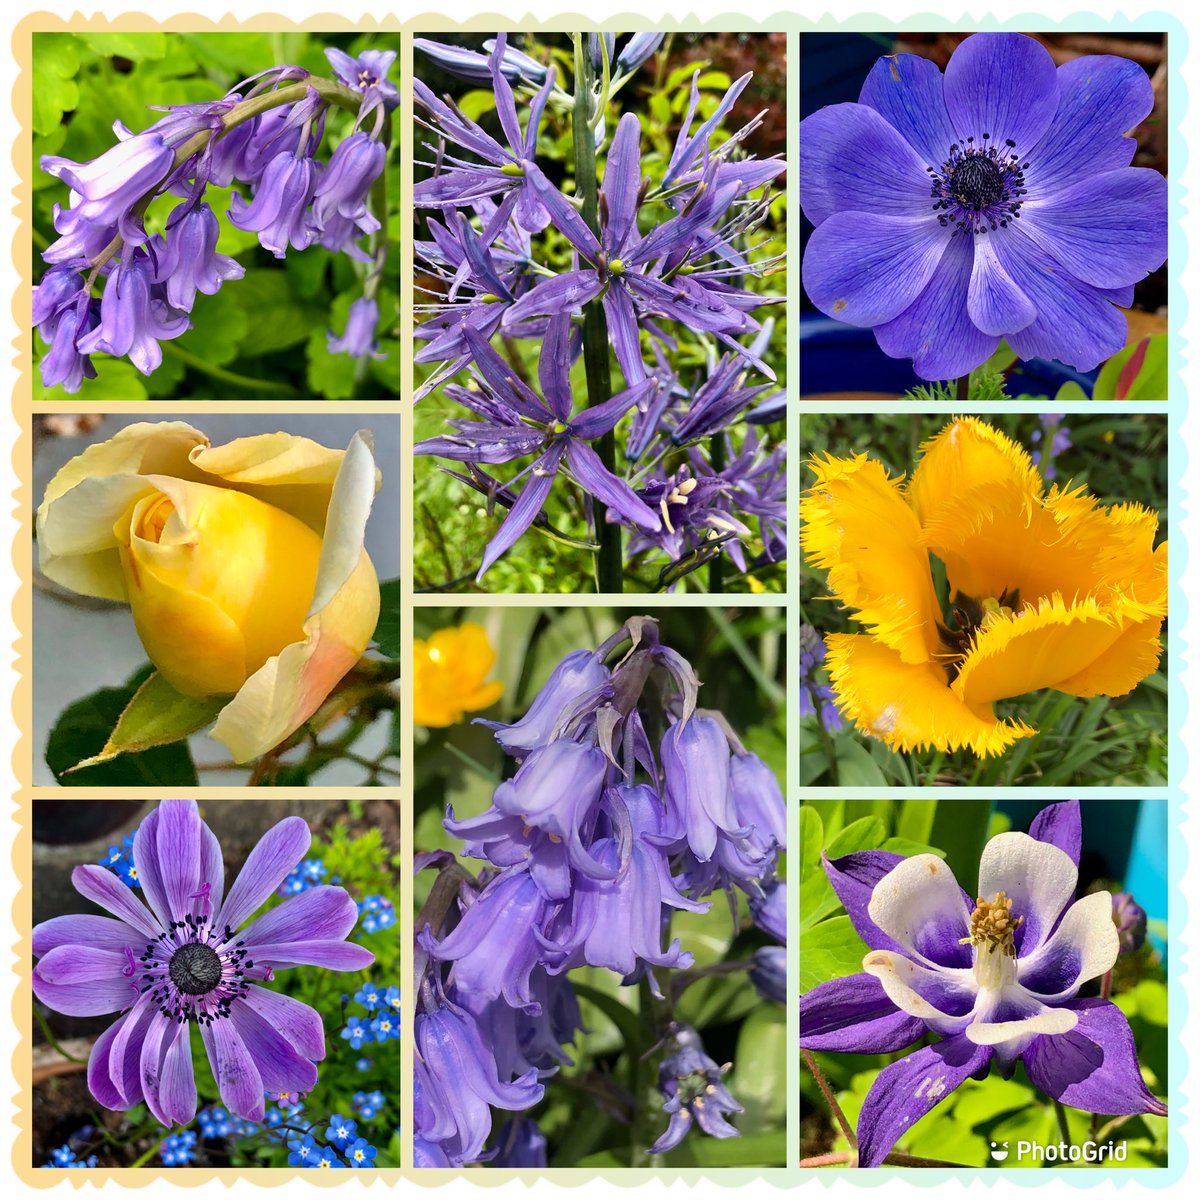 So much to love in my garden right now #FlowersOnFriday #fridaymorning #Flowers #GardeningWeek #MyGarden #BankHolidayWeekend